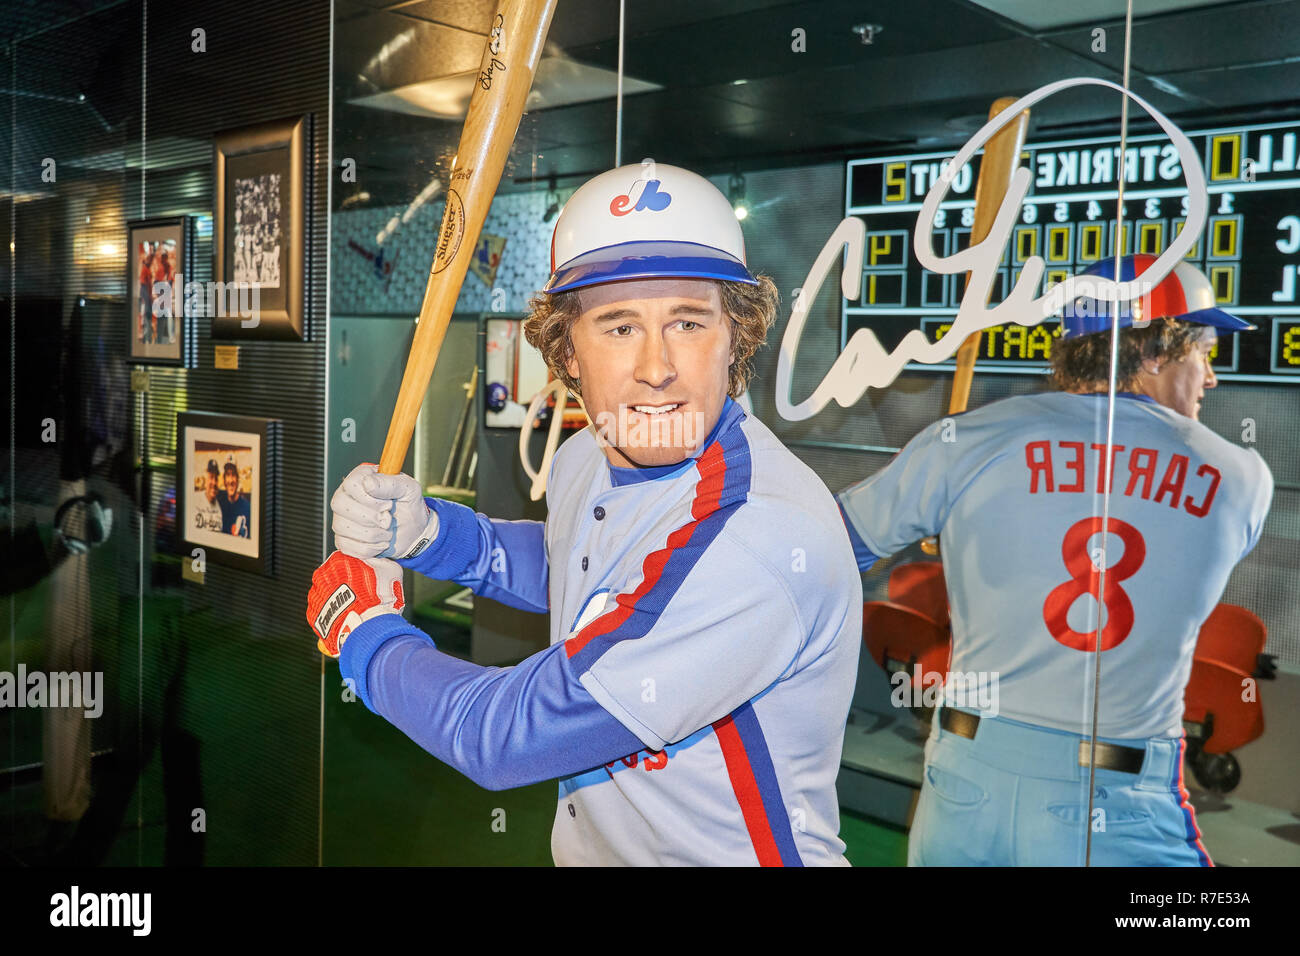 MONTREAL, KANADA - 23. SEPTEMBER 2018: Gary Carter American Professional baseball Catcher. Wachsfigurenkabinett Musée Grévin in Montreal, Quebec, Kanada Stockfoto